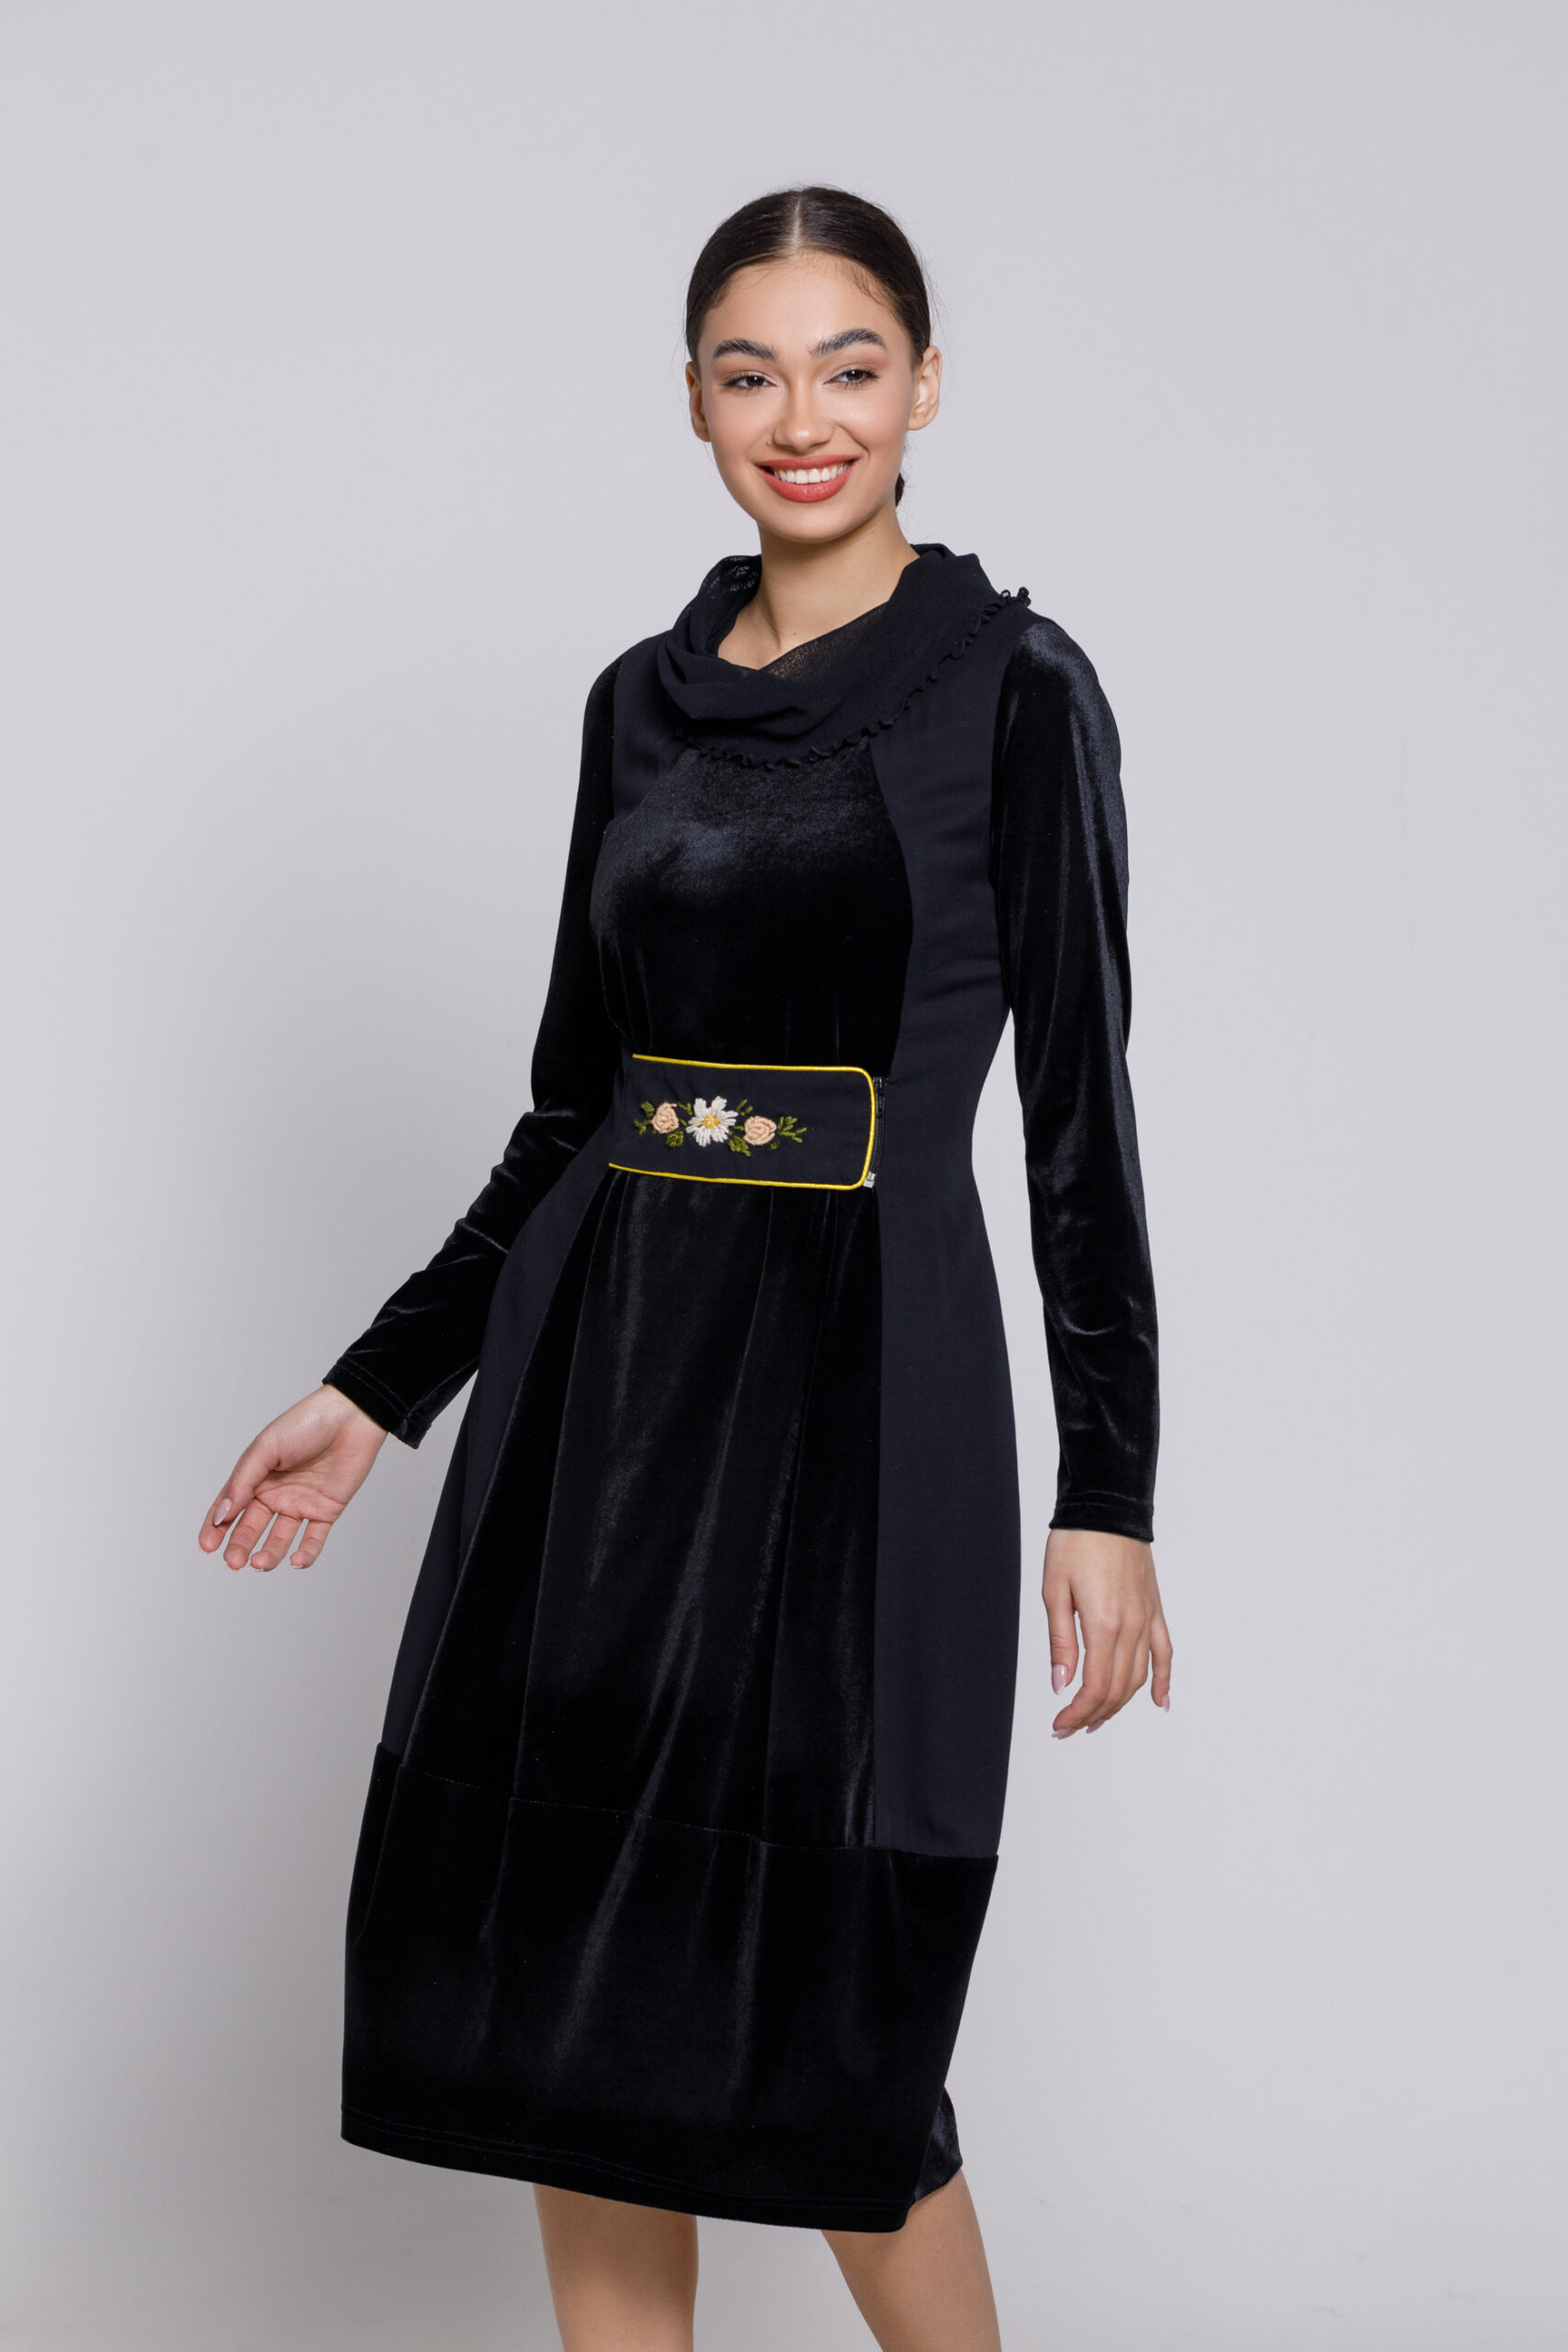 RAELYN black velvet and plush dress. Natural fabrics, original design, handmade embroidery